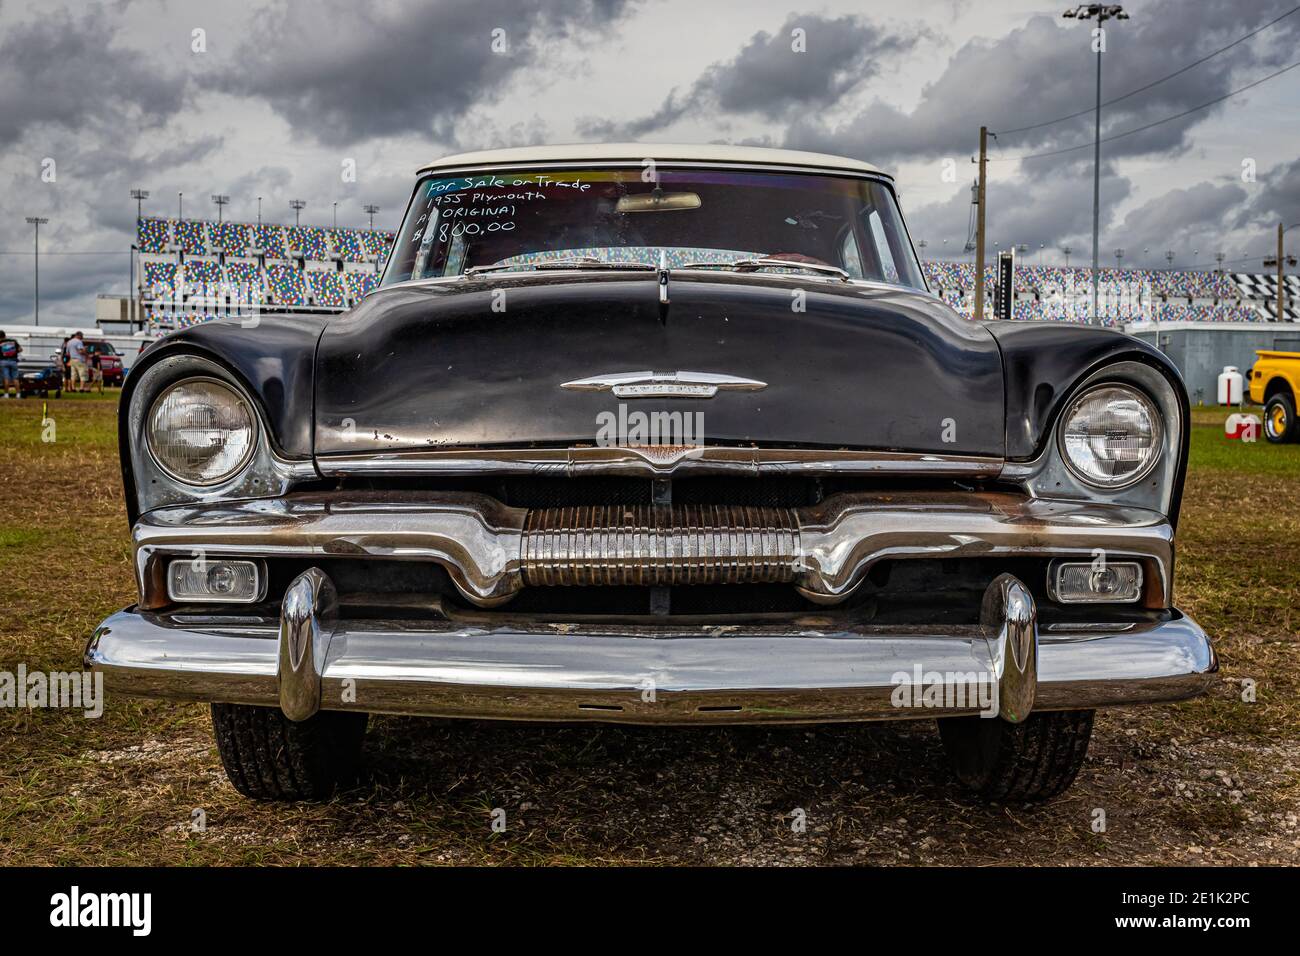 Daytona Beach, FL - November 29, 2020: 1955 Plymouth Belvedere at a local car show. Stock Photo